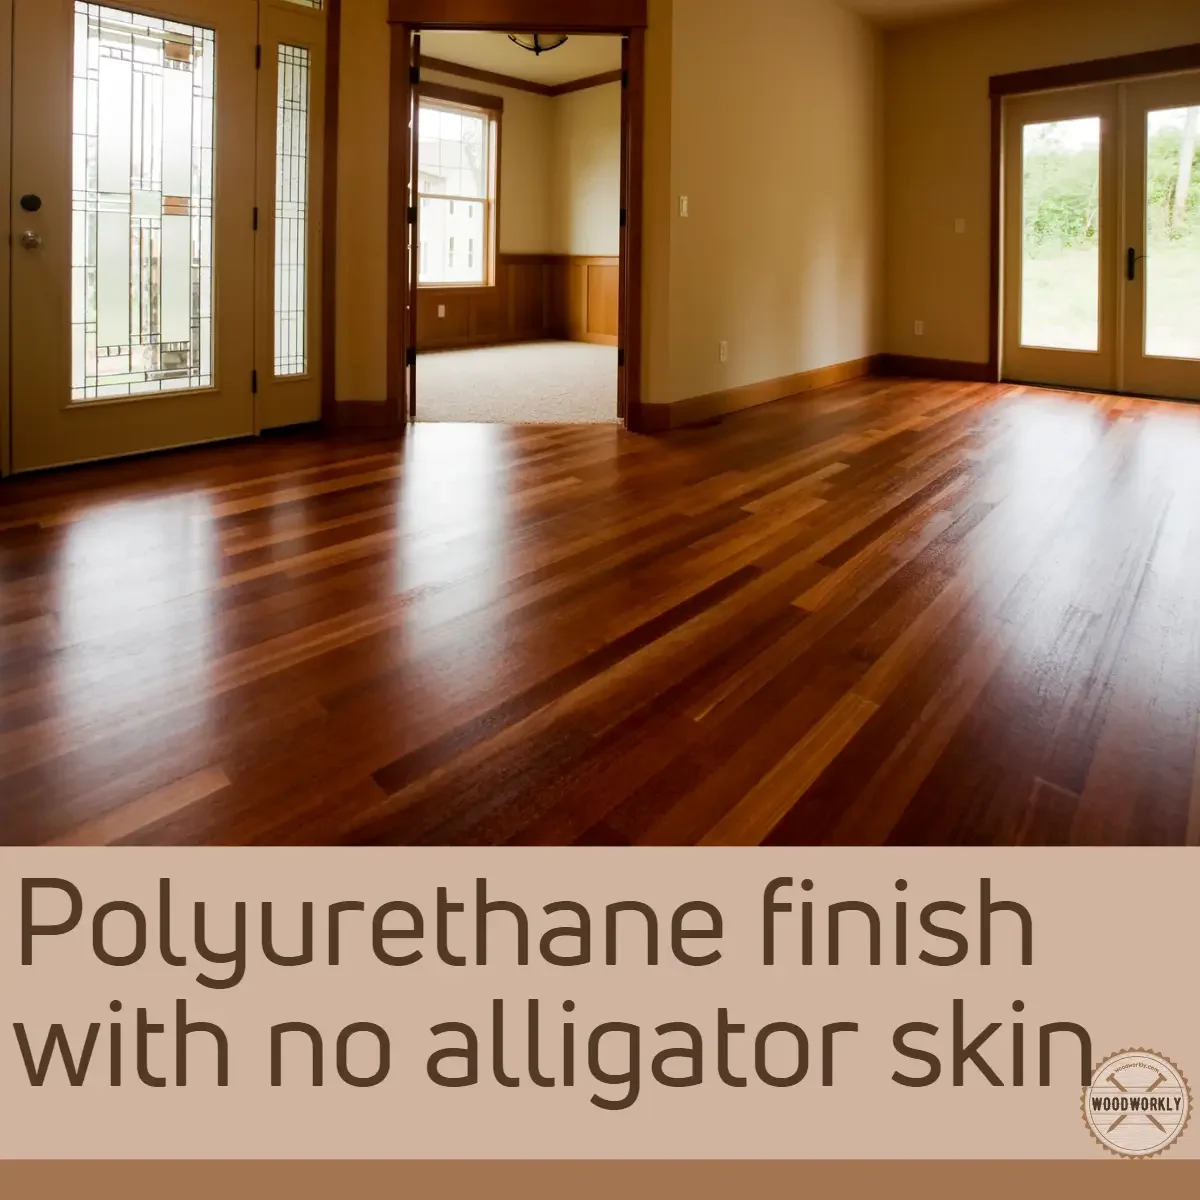 Polyurethane finish with no alligator skin